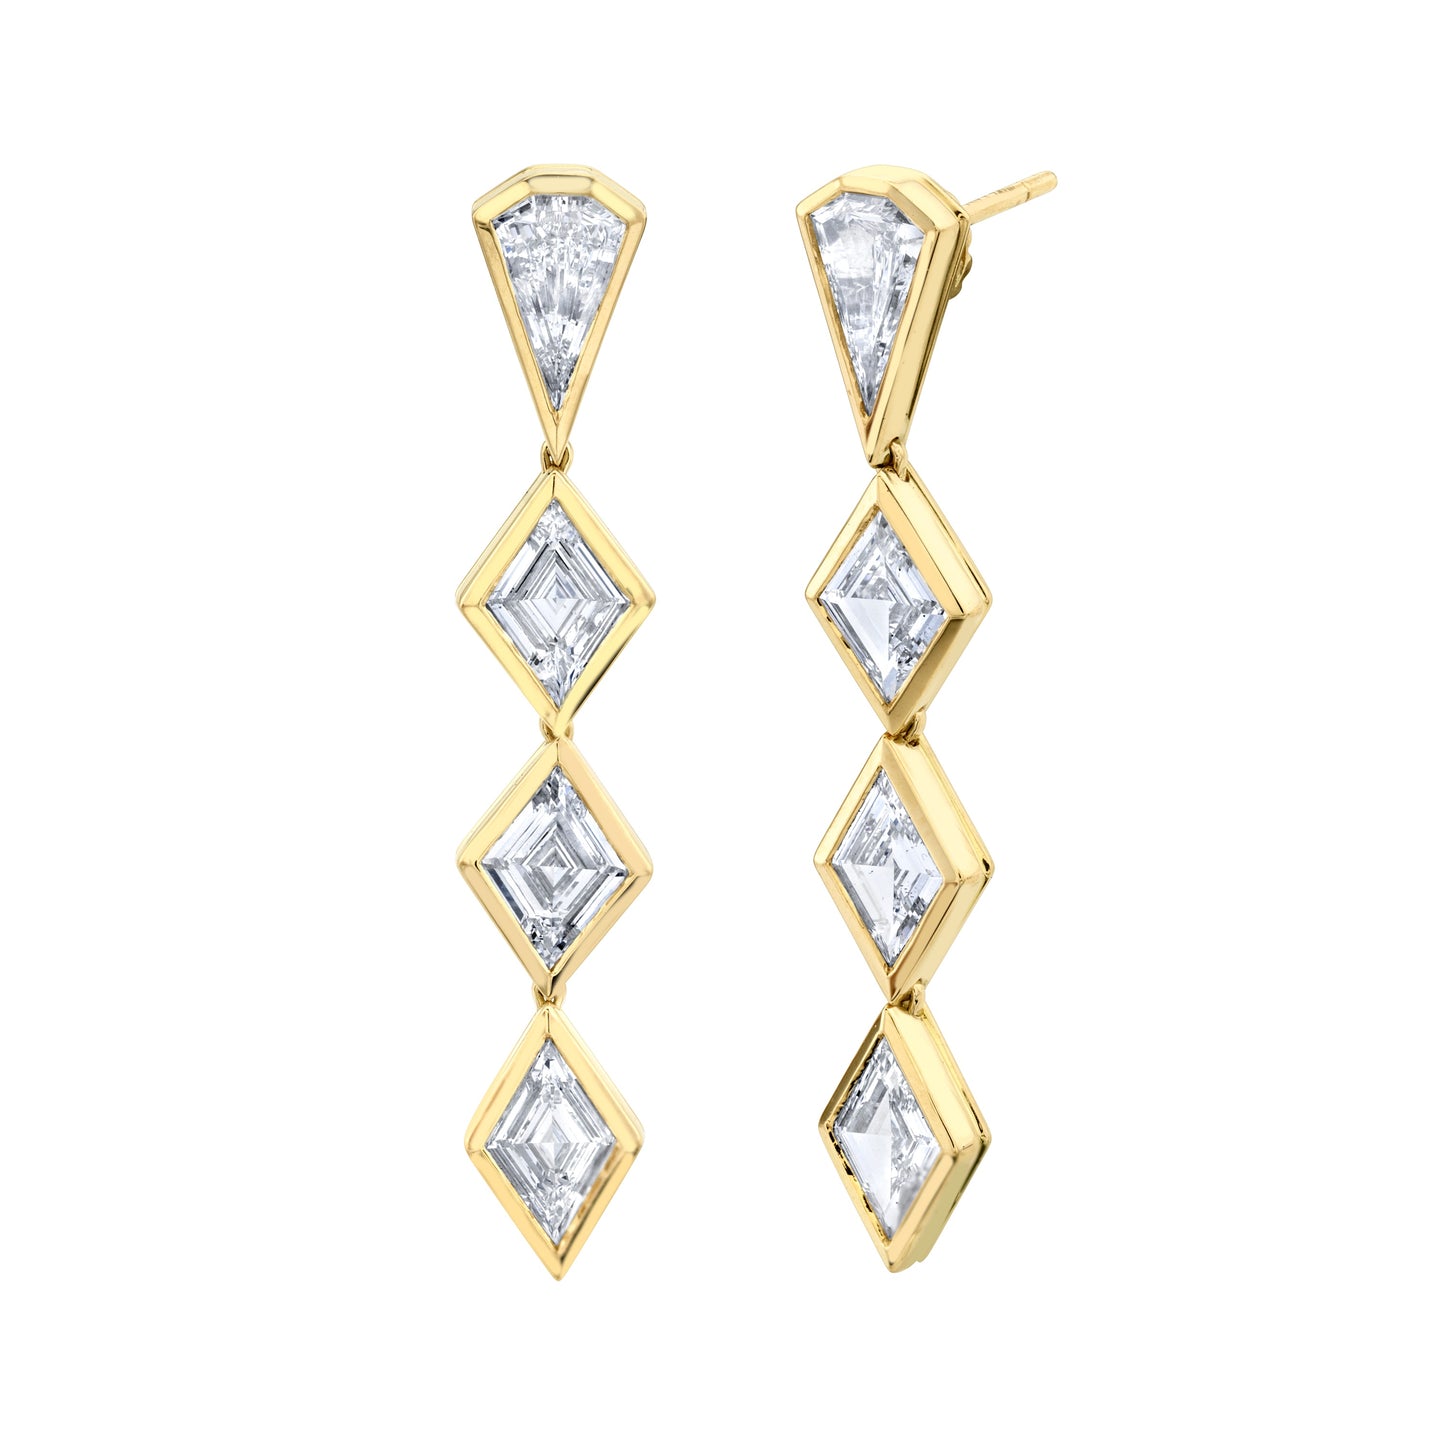 Latest Gold And Diamond Stud Earrings Designs For Kids/Baby Tops/Teenage...  | Diamond, Diamond studs, Diamond earrings studs